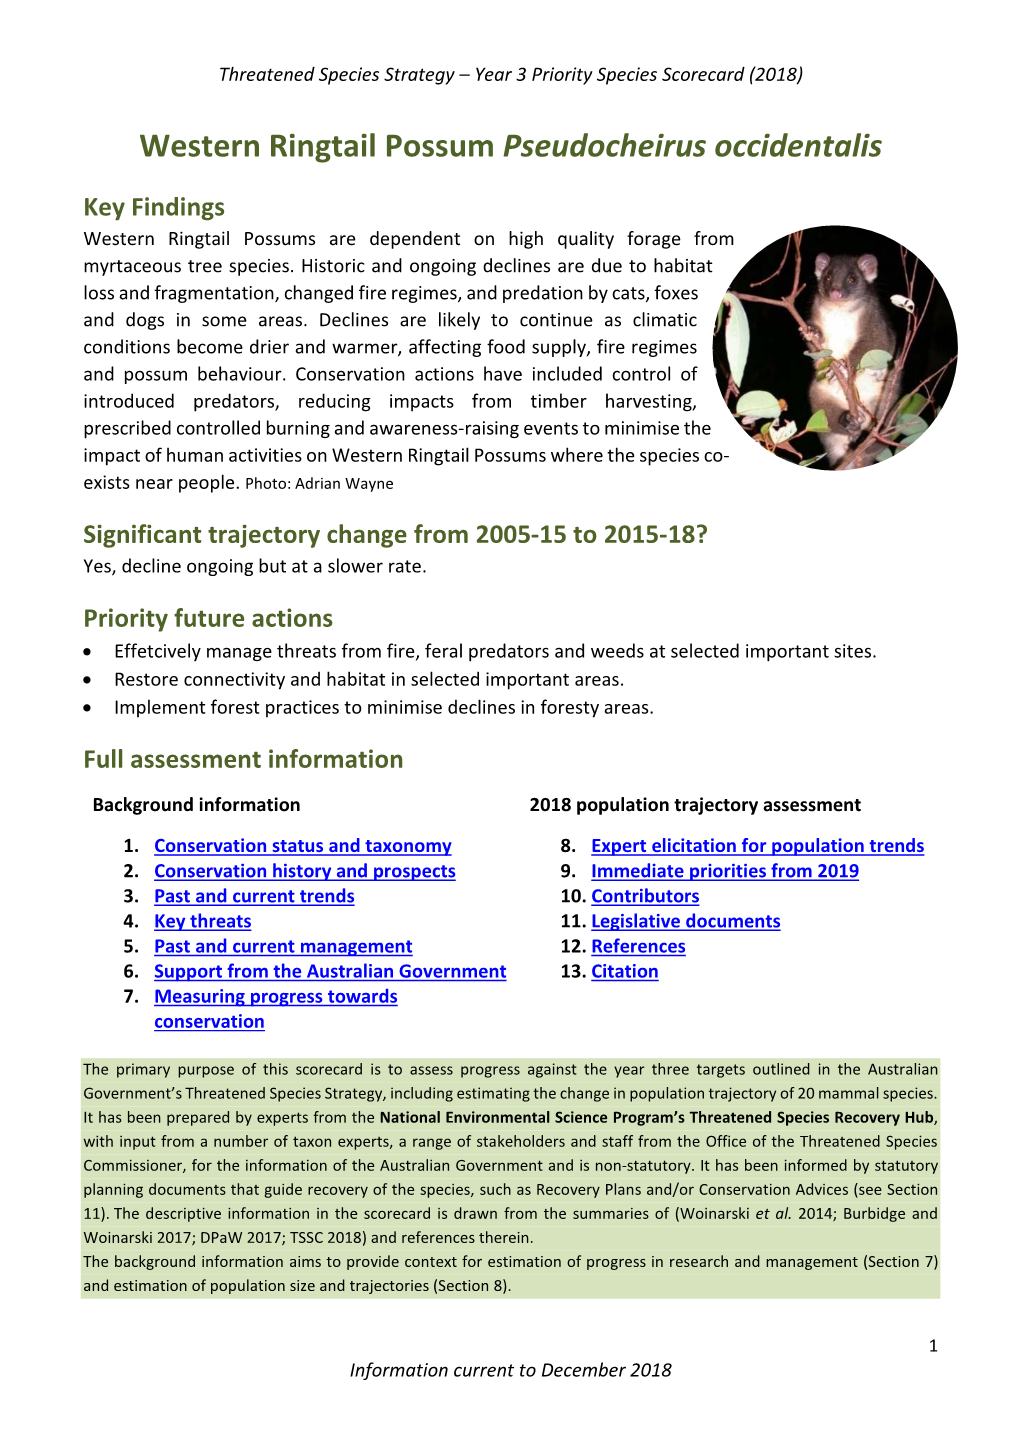 Threatened Species Strategy Year 3 Scorecard – Western Ringtail Possum